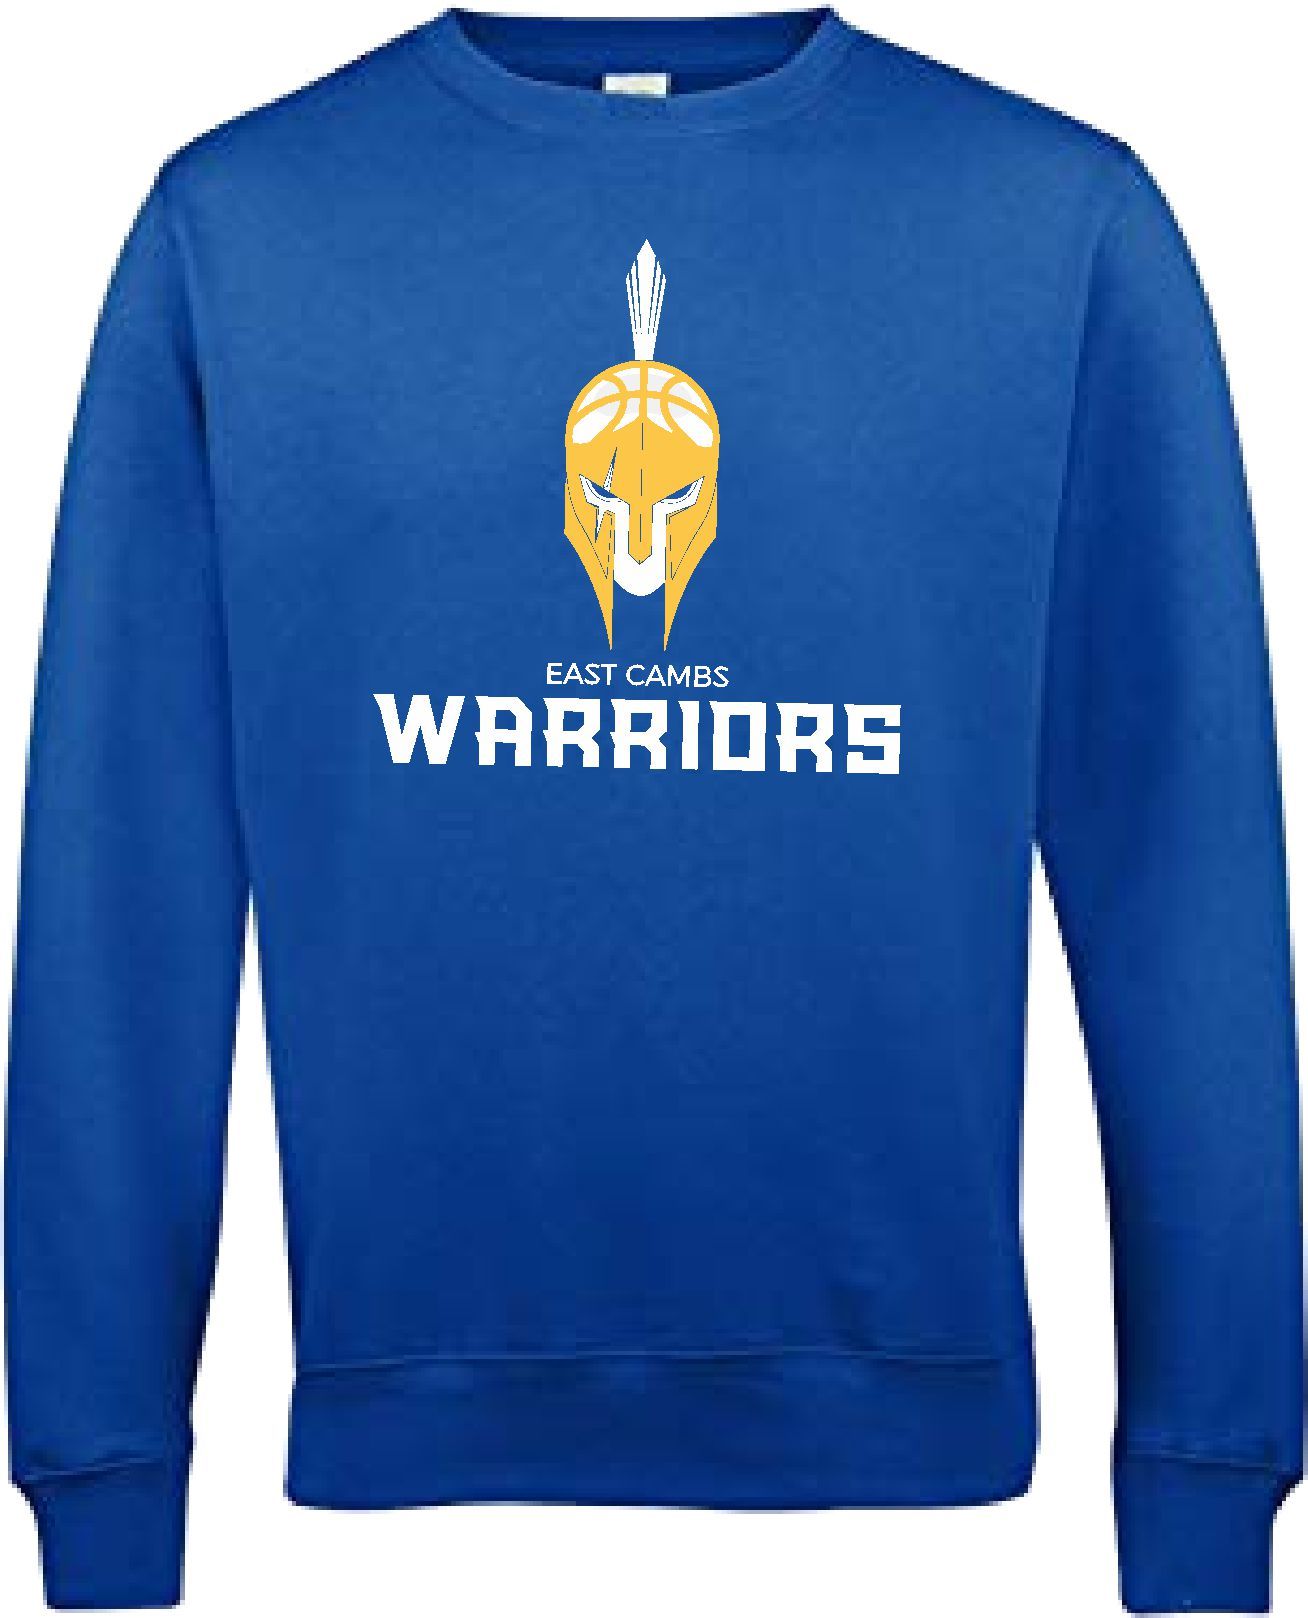 Warriors - Sweatshirt (Royal Blue)